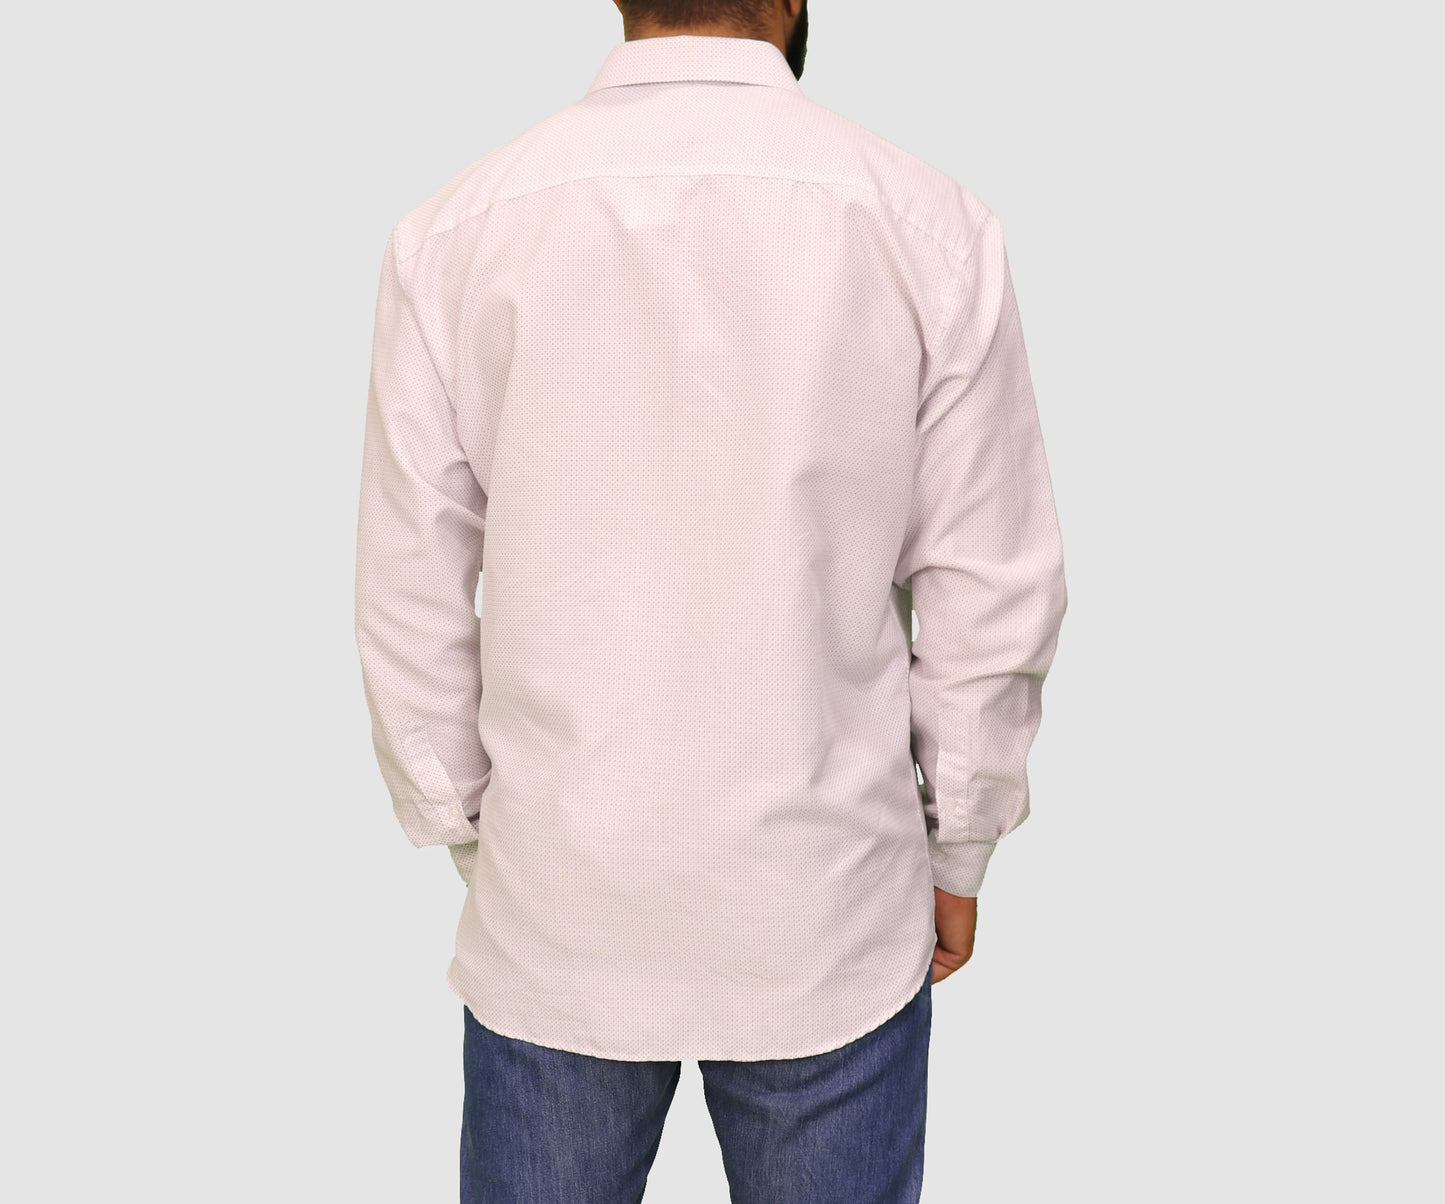 NICOLE MILLER Mens Tops Large / White Long Sleeve Shirt